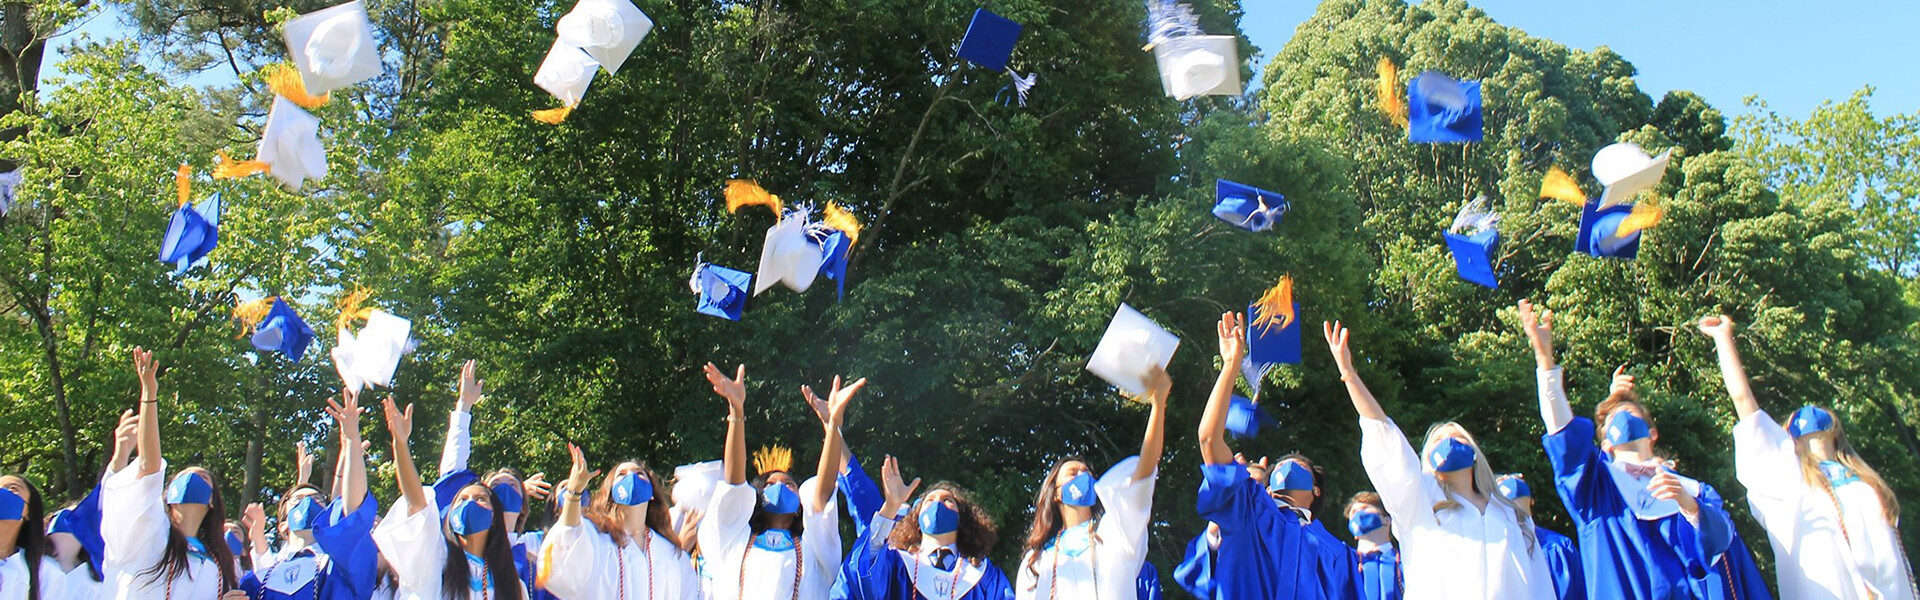 High school graduates throwing caps in the air at graduation